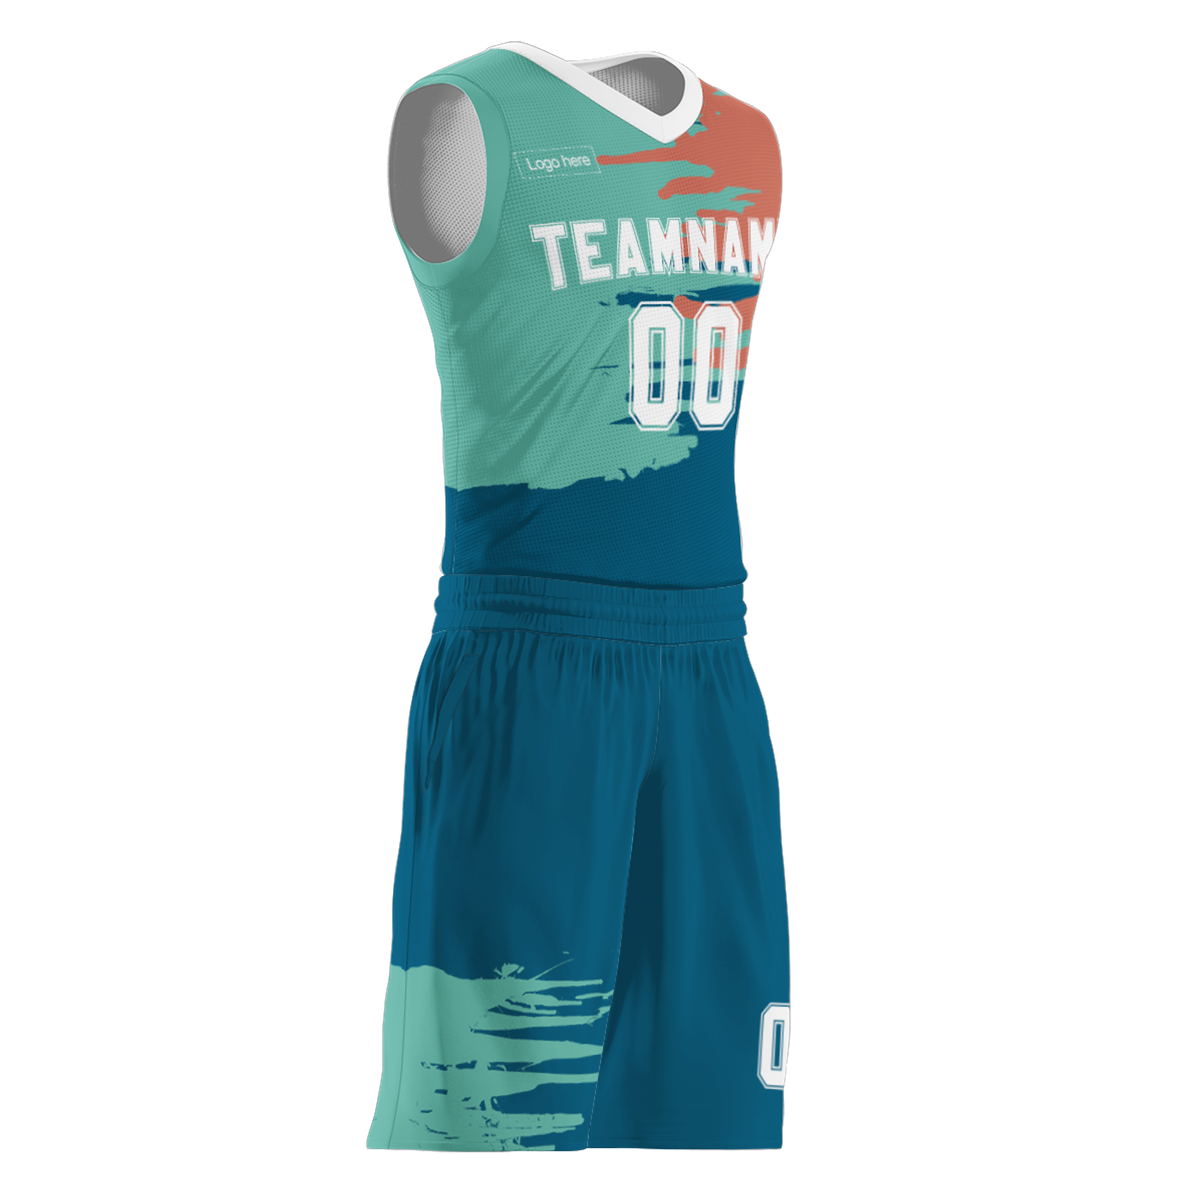 Custom Printed Basketball Jerseys Design Sports Jersey Sublimation Comfortable Basketball Wear Uniforms